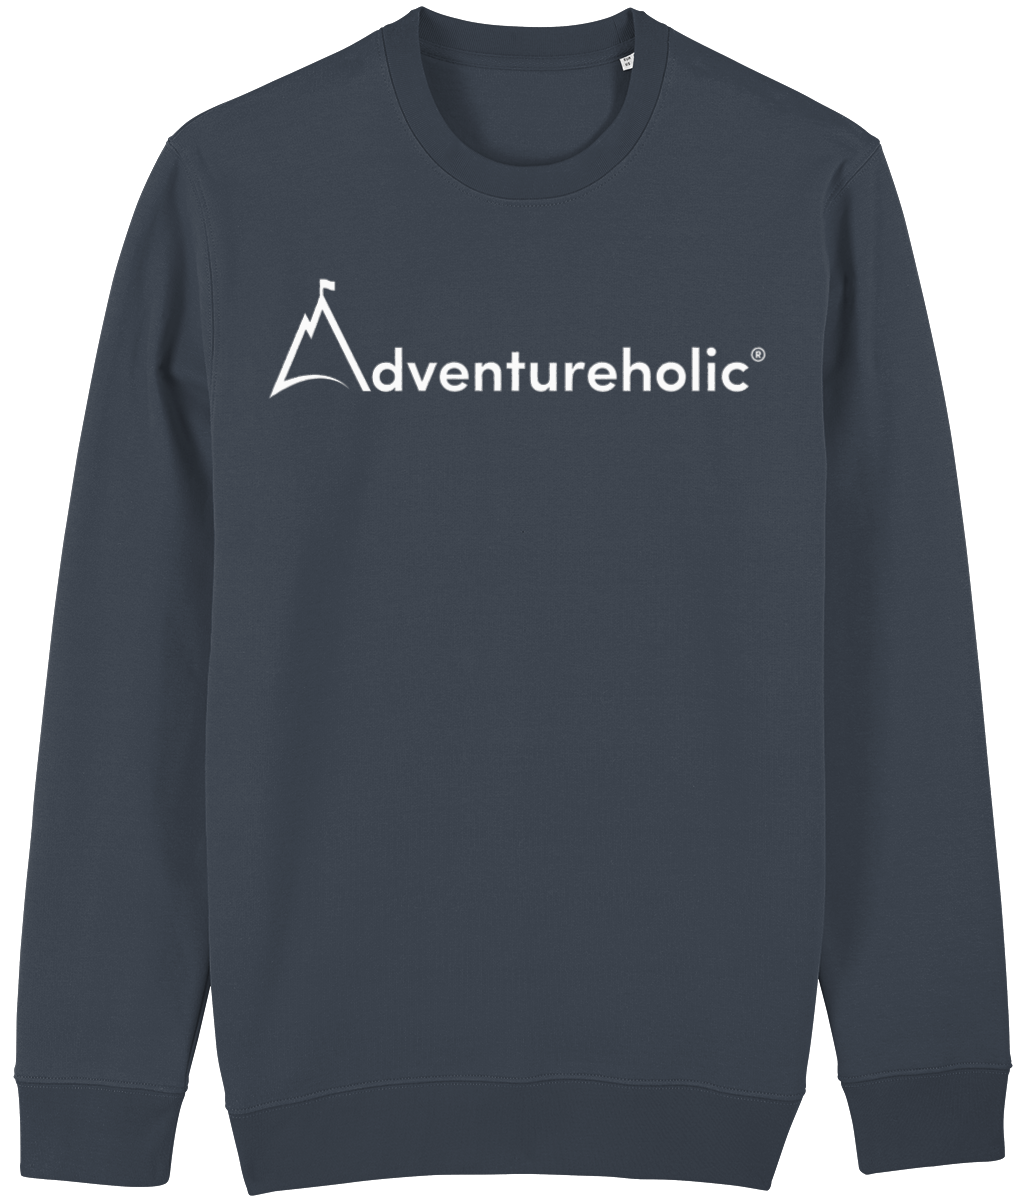 Adventureholic Unisex Sweatshirt - White Print